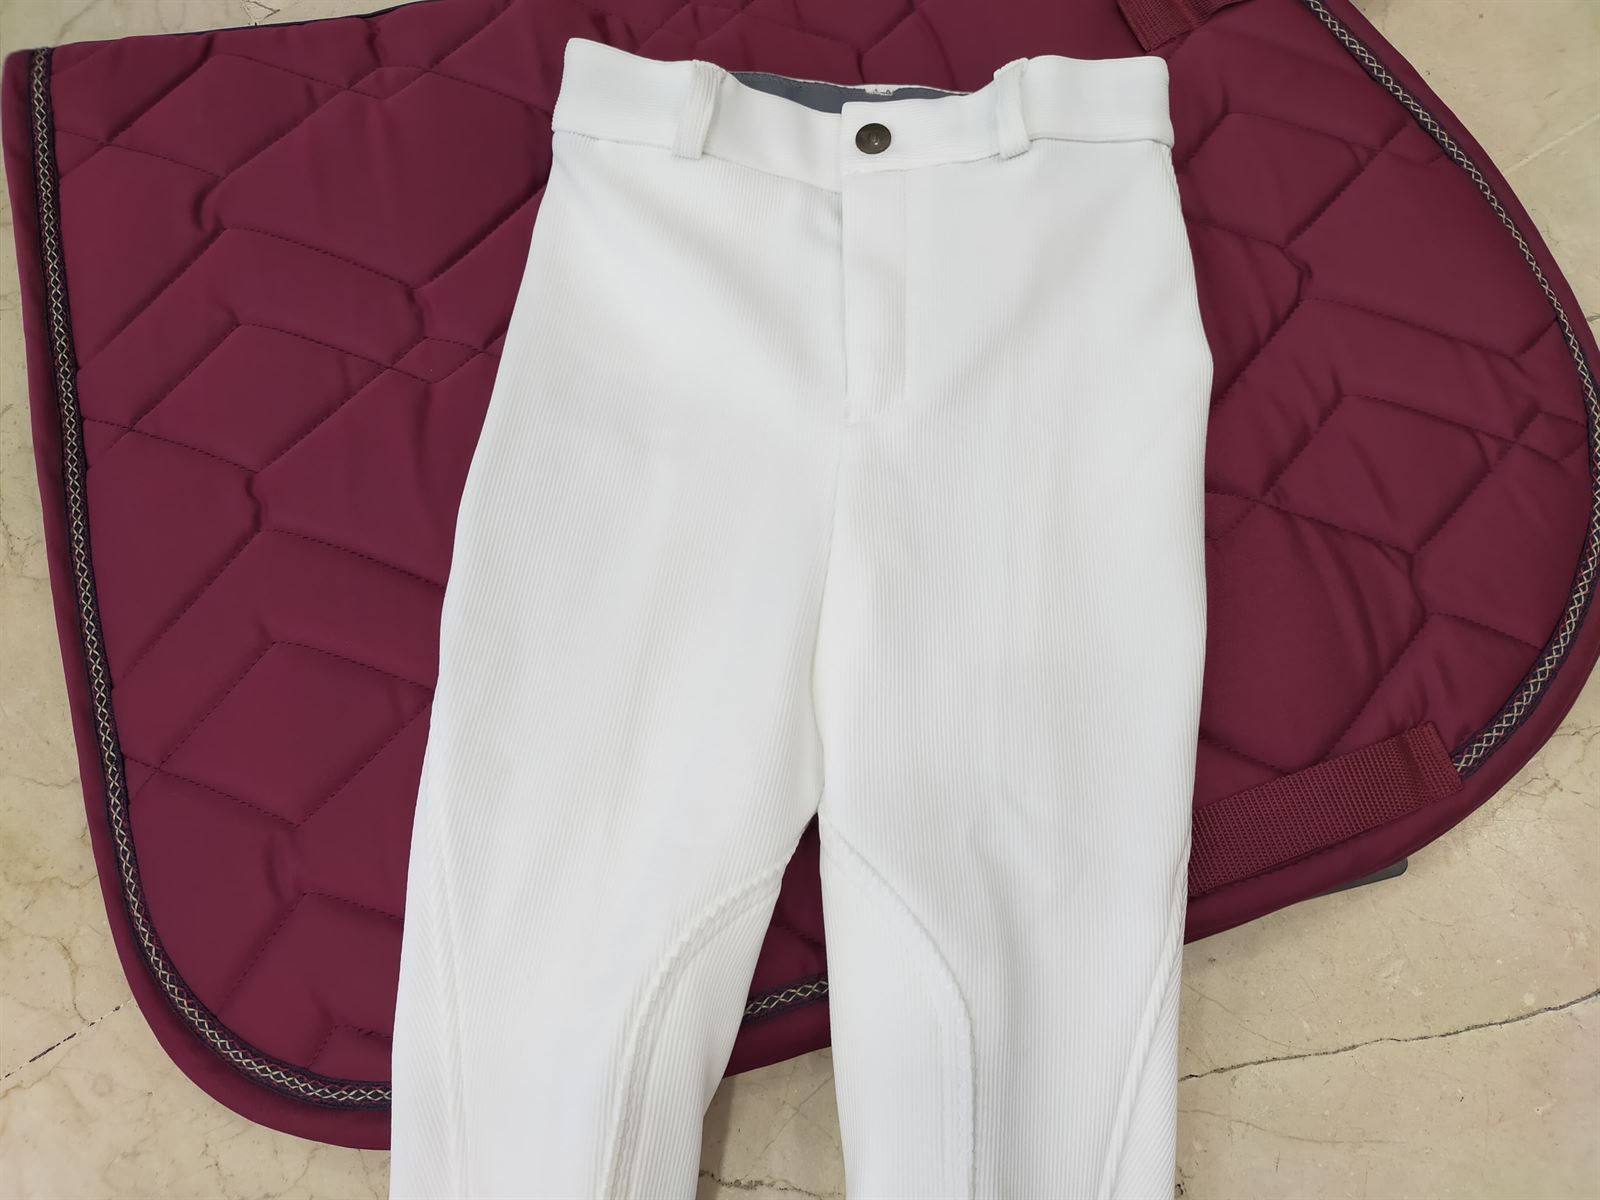 Pantalón unisex TUFF RIDER Country color blanco TALLA 10 (tallaje infantil) - Imagen 3